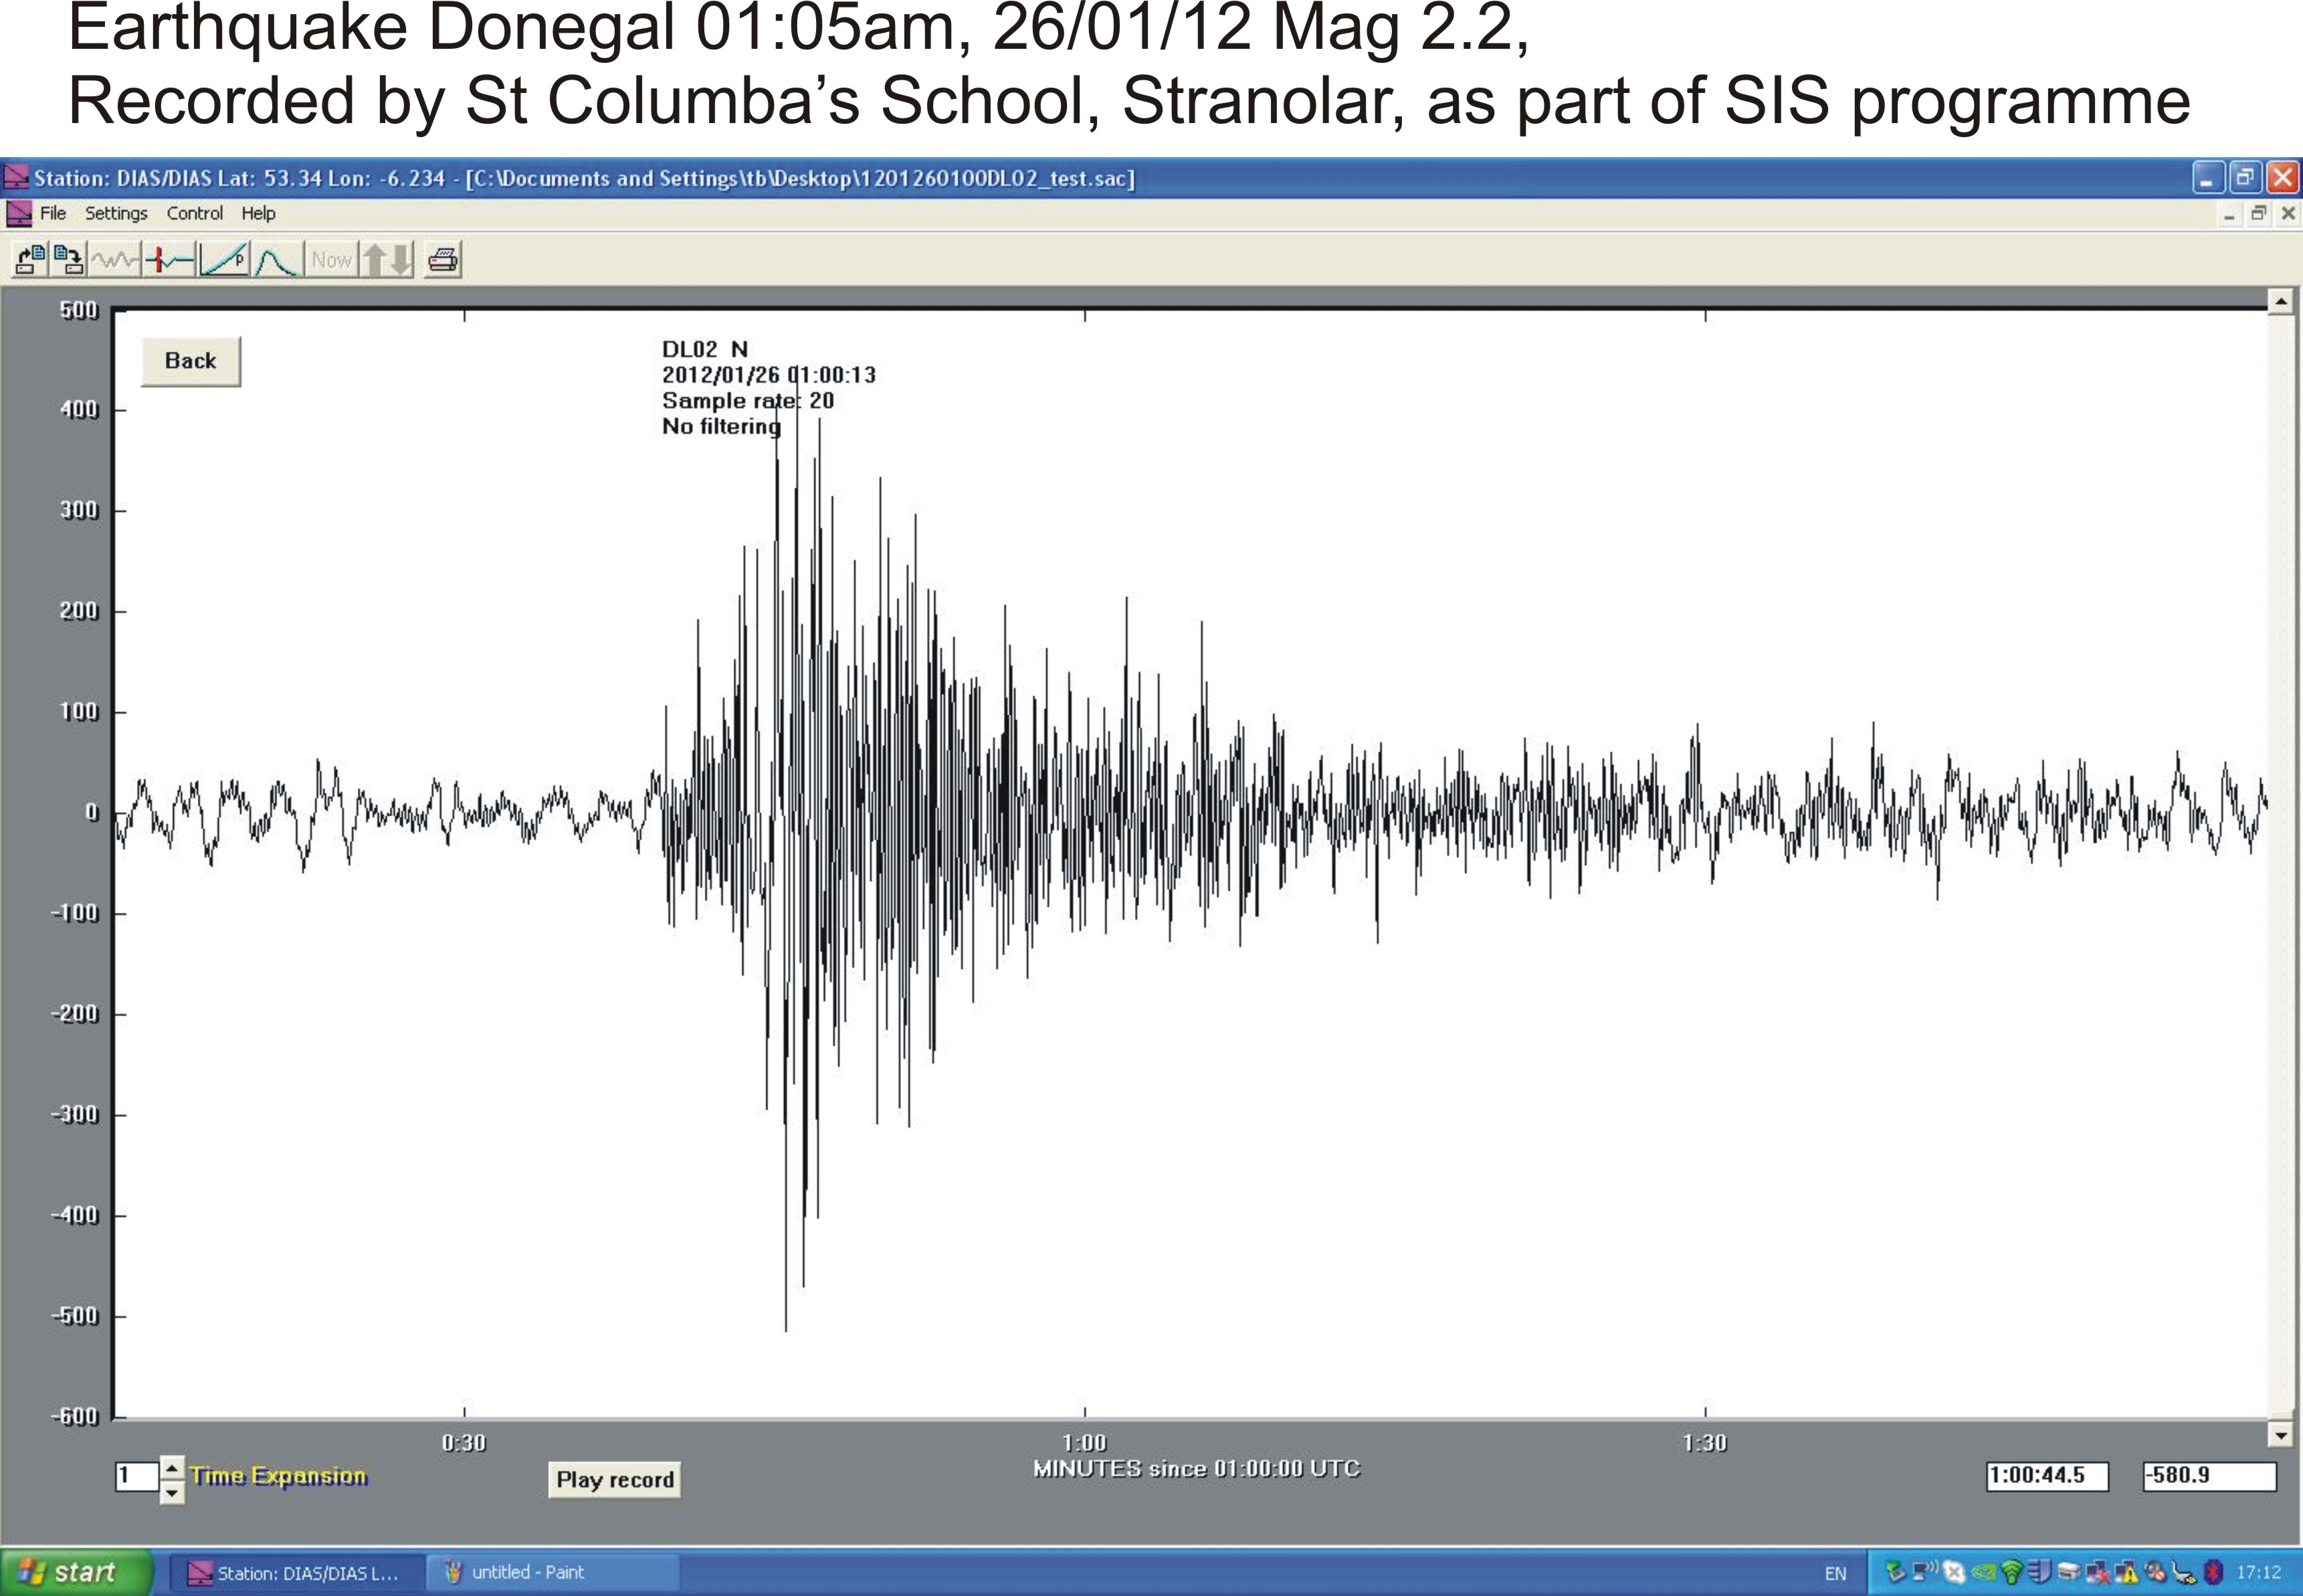 Donegal earthquake 26012012, St Columba's School, Stranolar